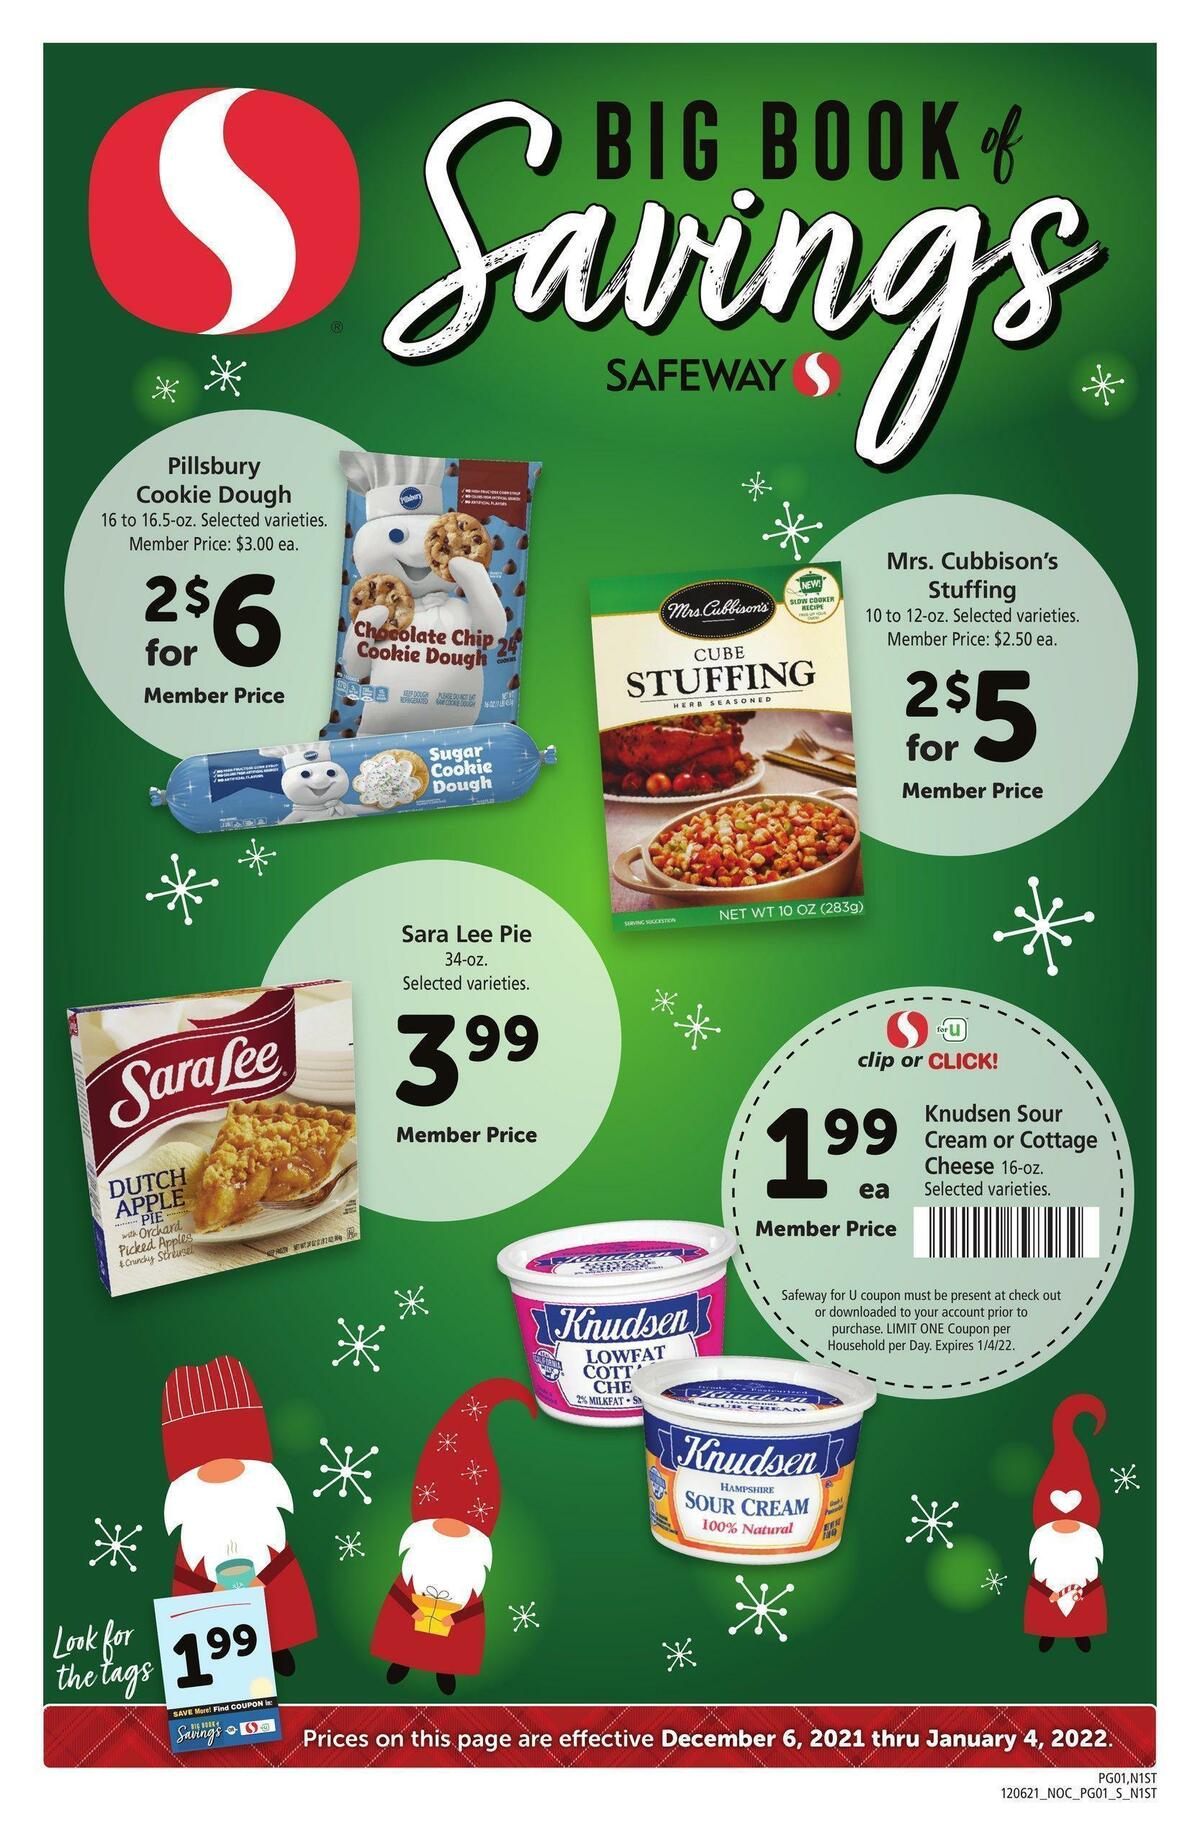 Safeway Big Book of Savings Weekly Ad from December 6